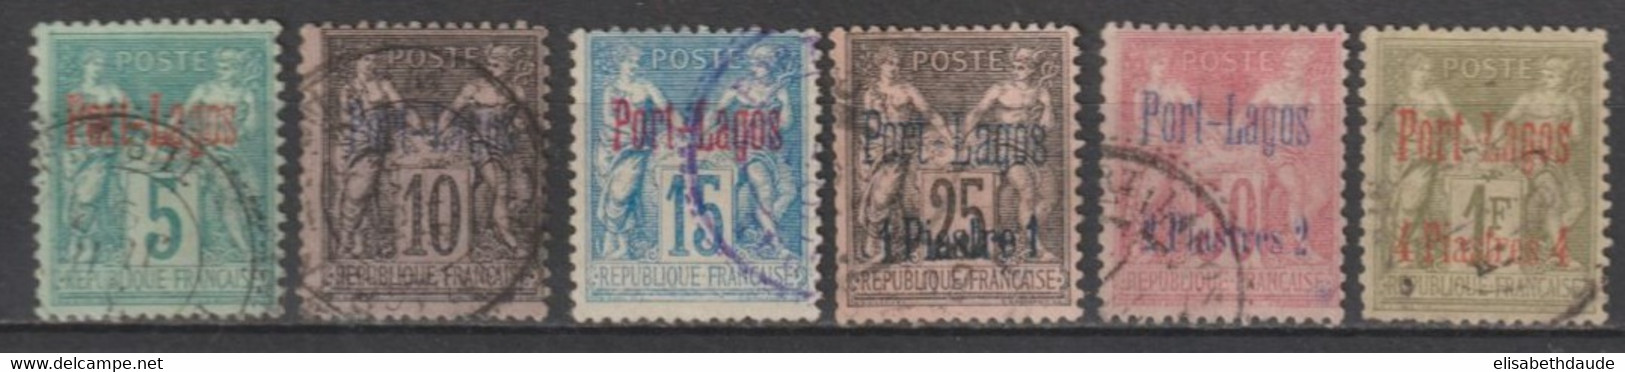 PORT LAGOS - 1893 - SERIE COMPLETE YVERT N° 1/6 OBLITERES - COTE = 500 EUR. - Usados